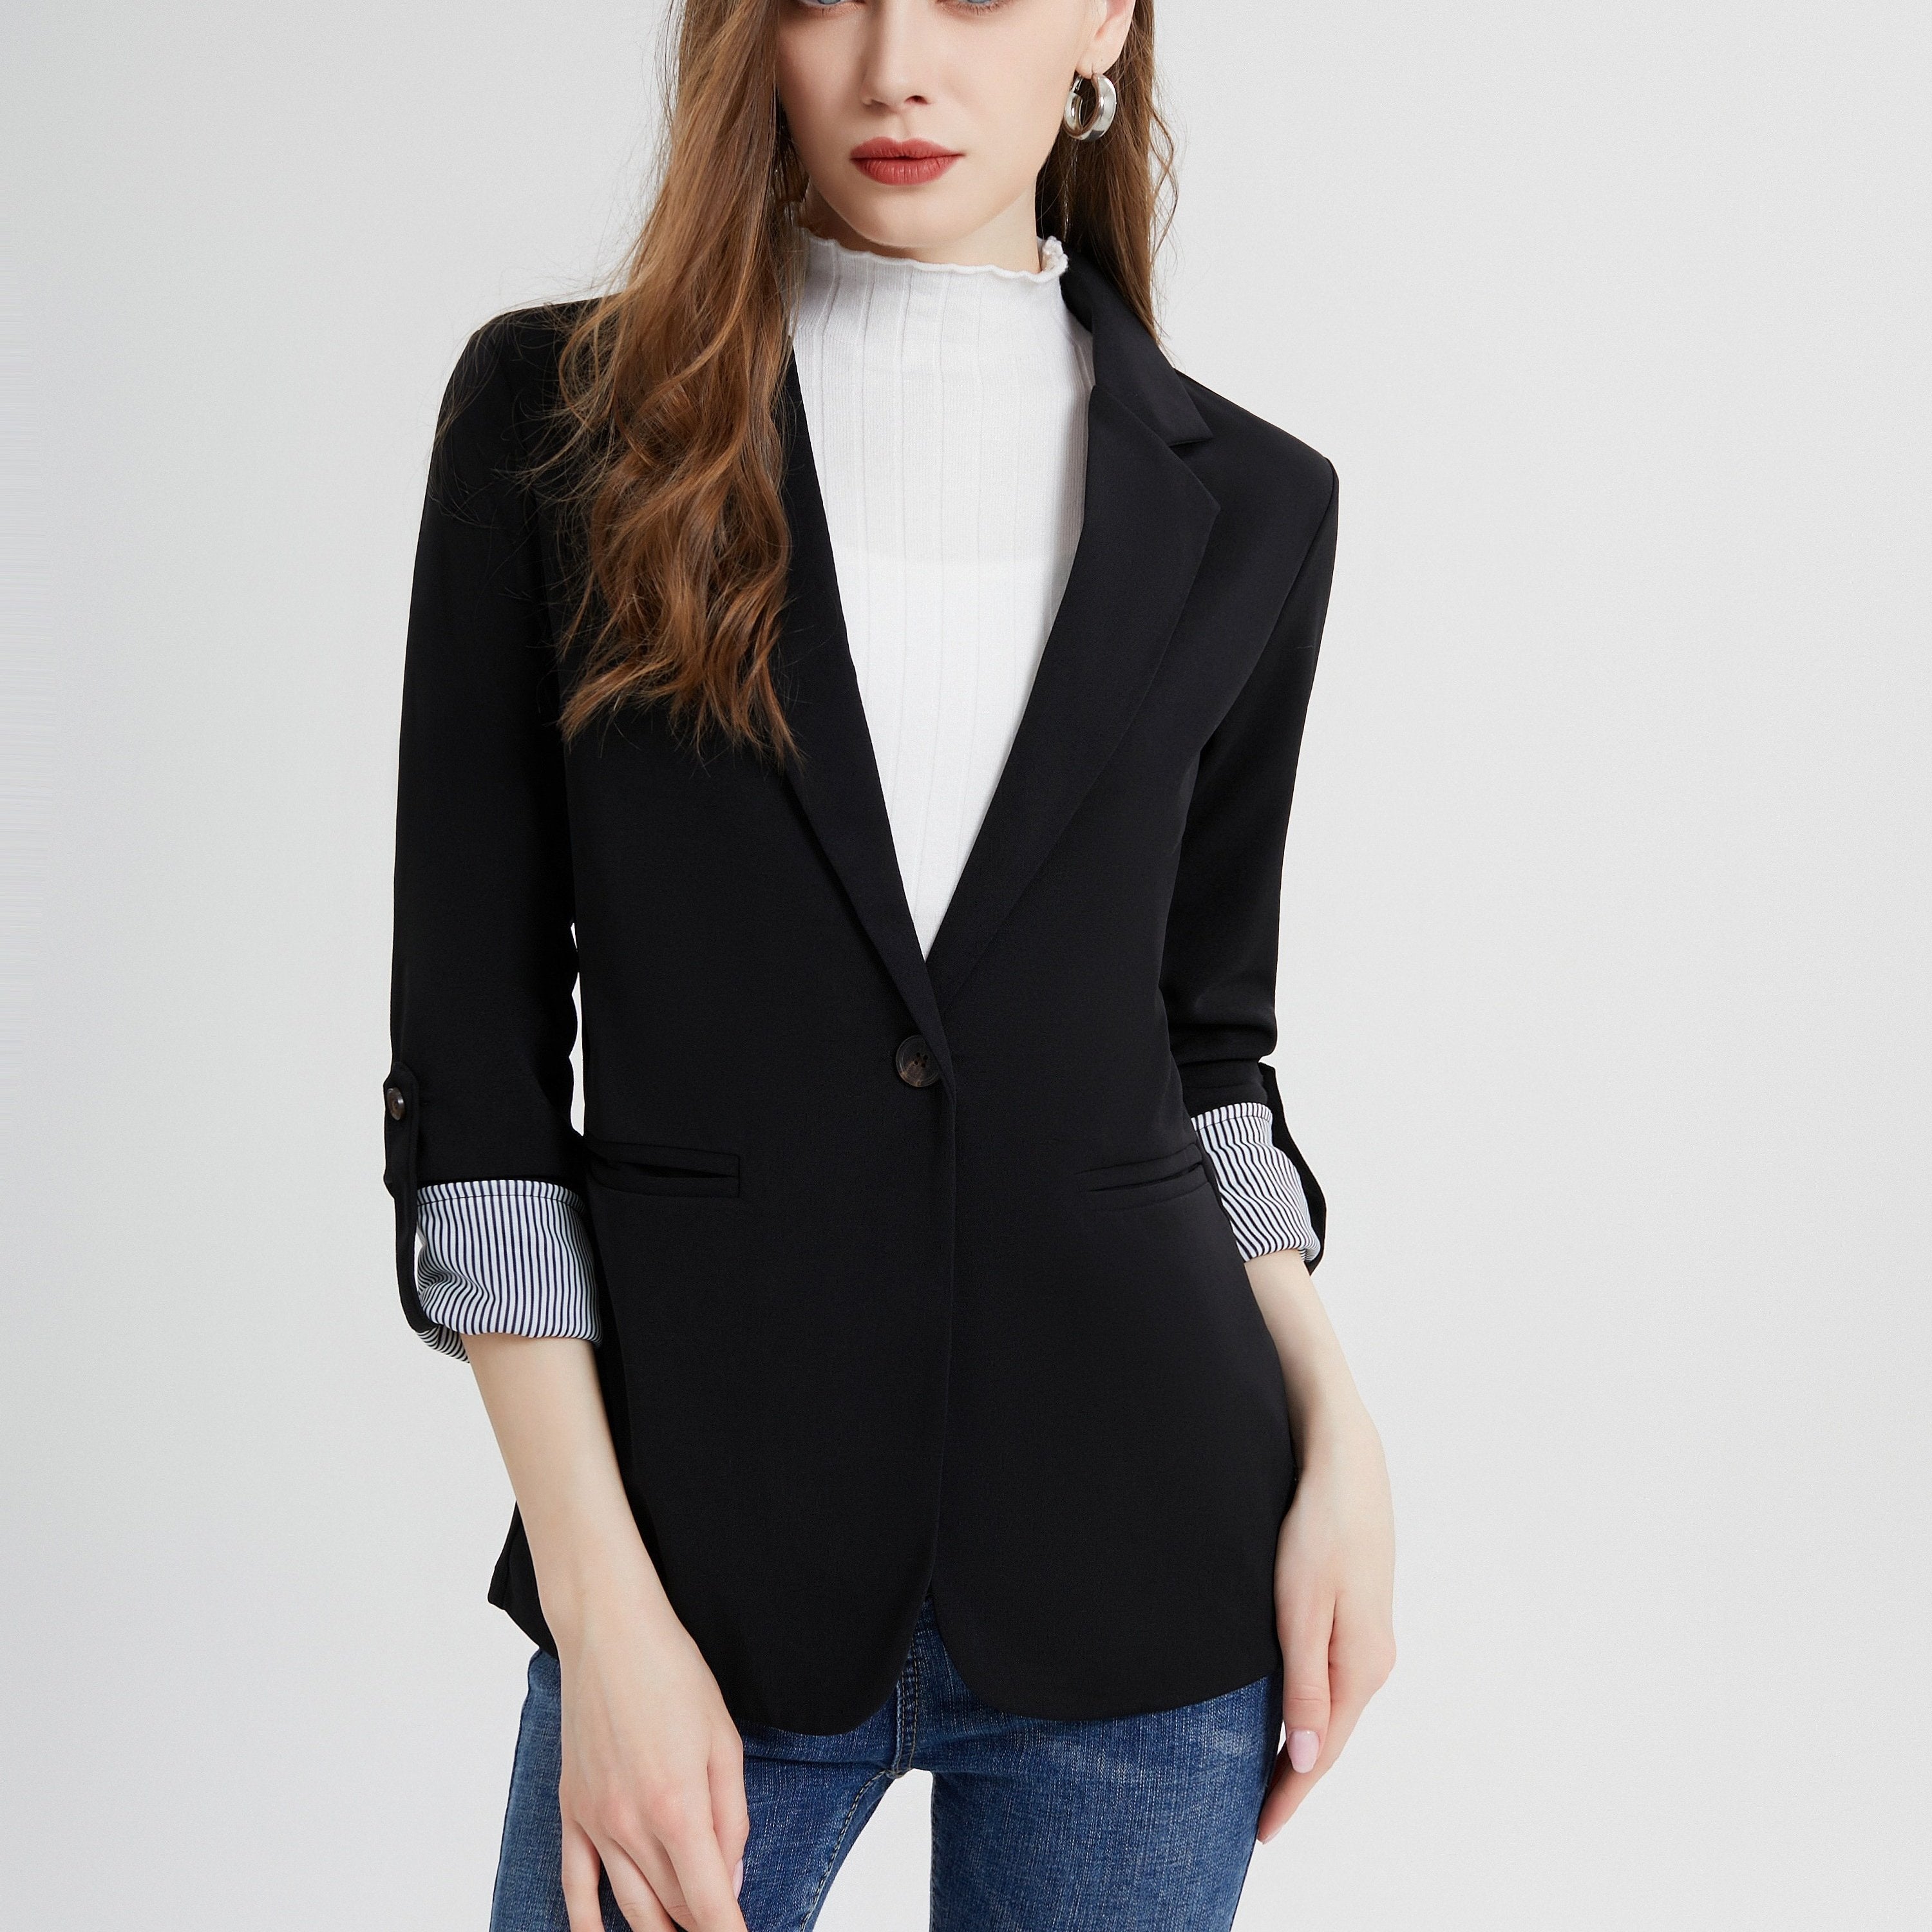 「lovevop」V-neck Pocket Basic Blazer Coat, Casual Long Sleeve Fashion Loose Blazer Outerwear, Women's Clothing